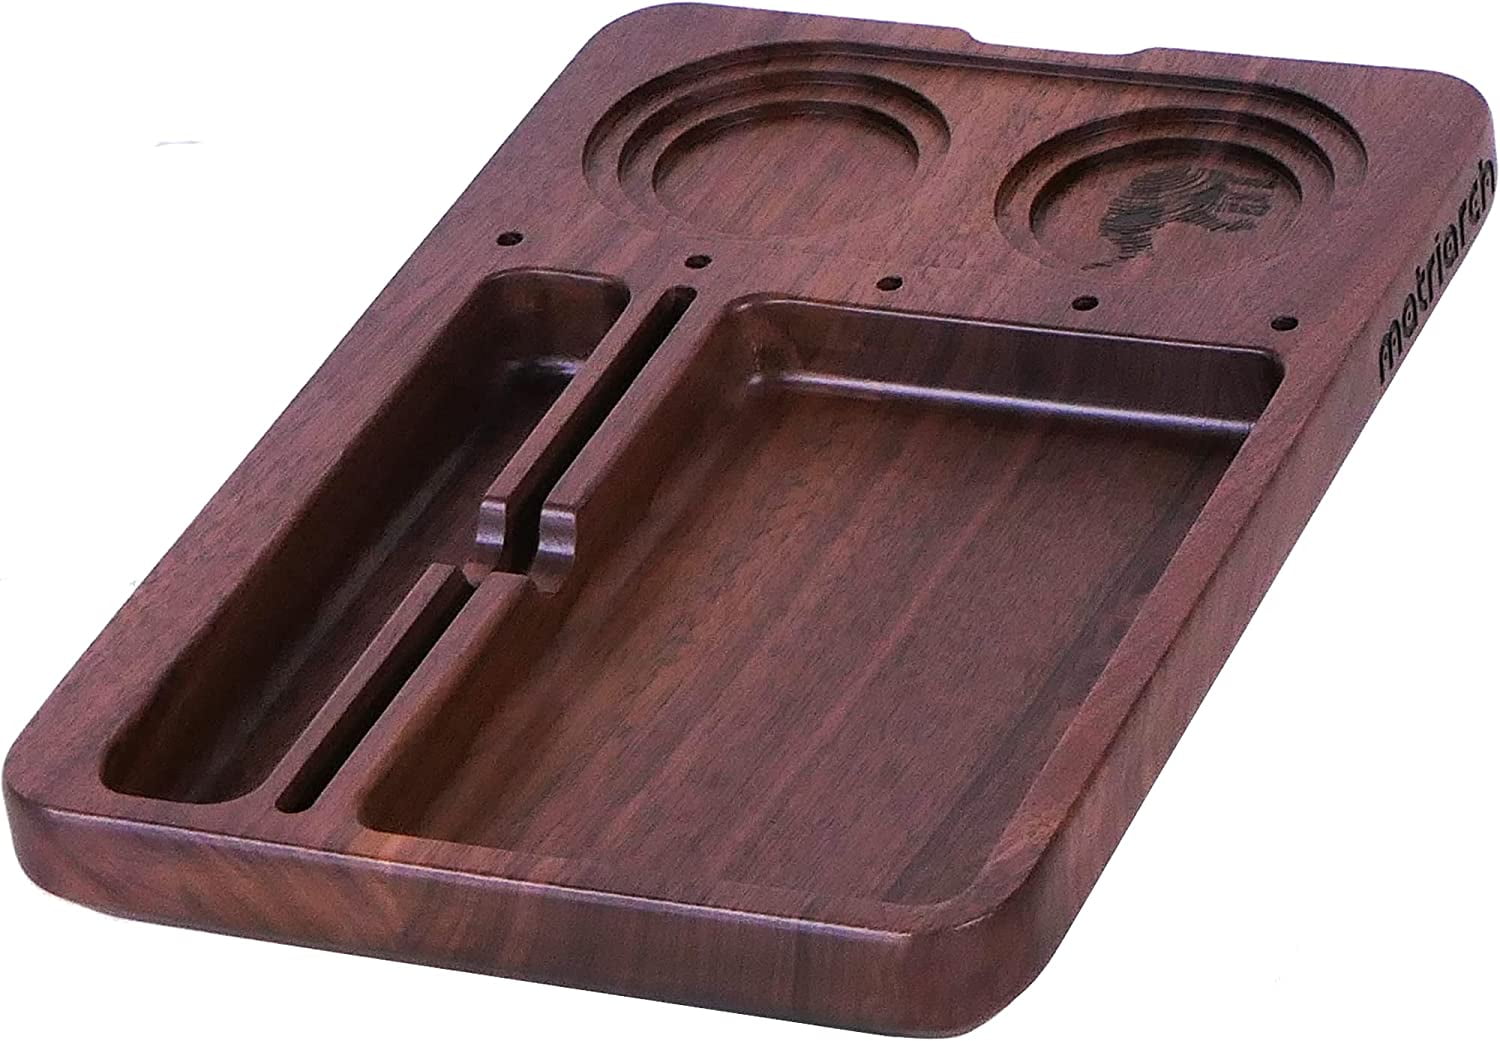 Custom hardwood rolling tray